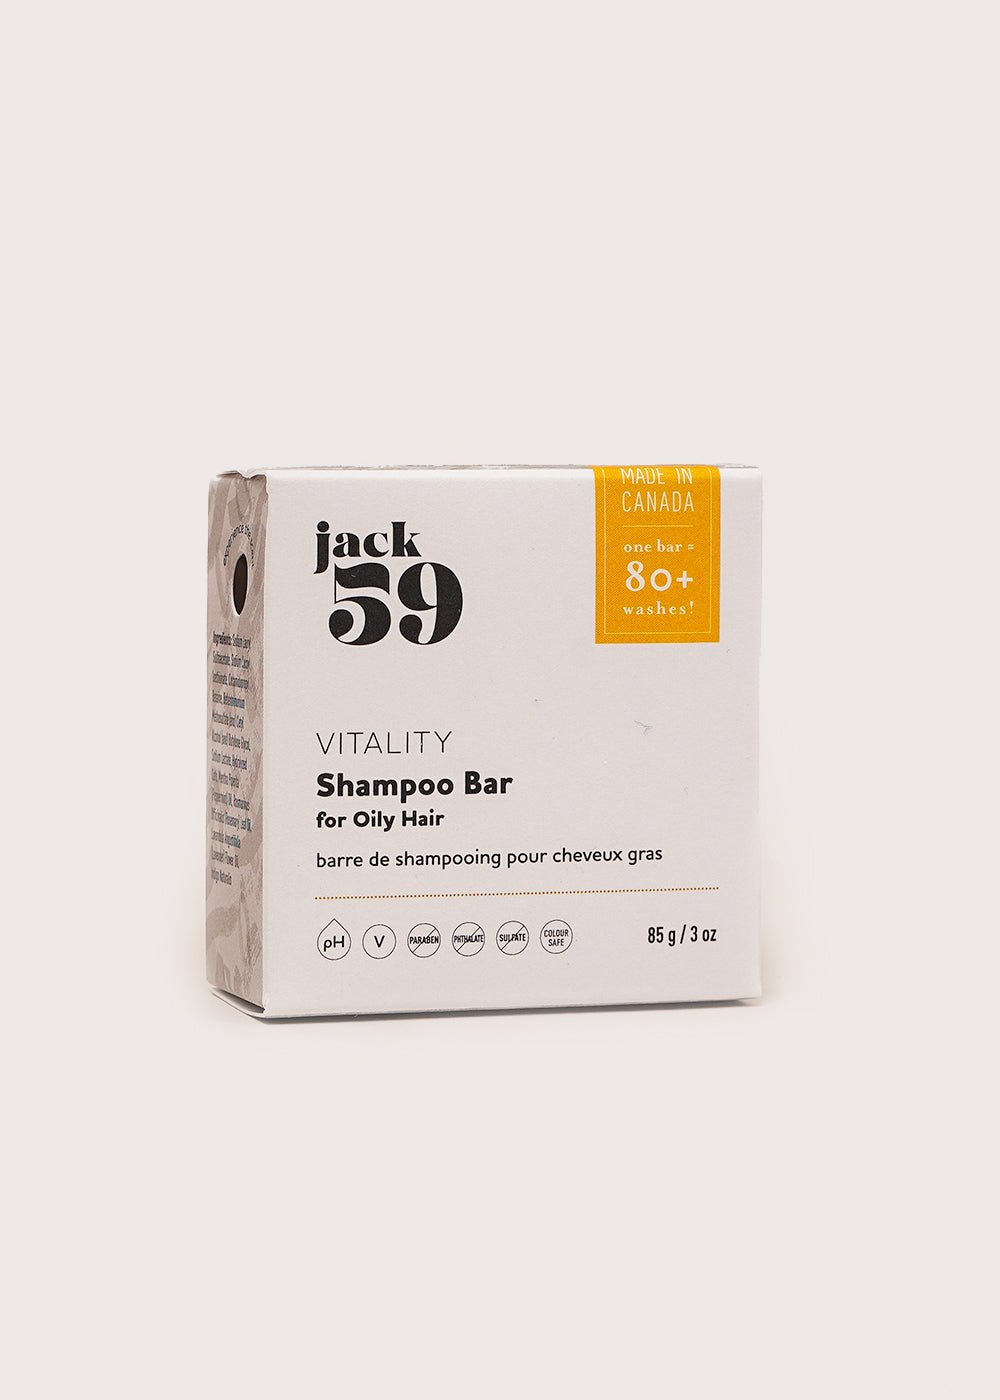 Jack59 Vitality Shampoo Bar - New Classics Studios Sustainable Ethical Fashion Canada